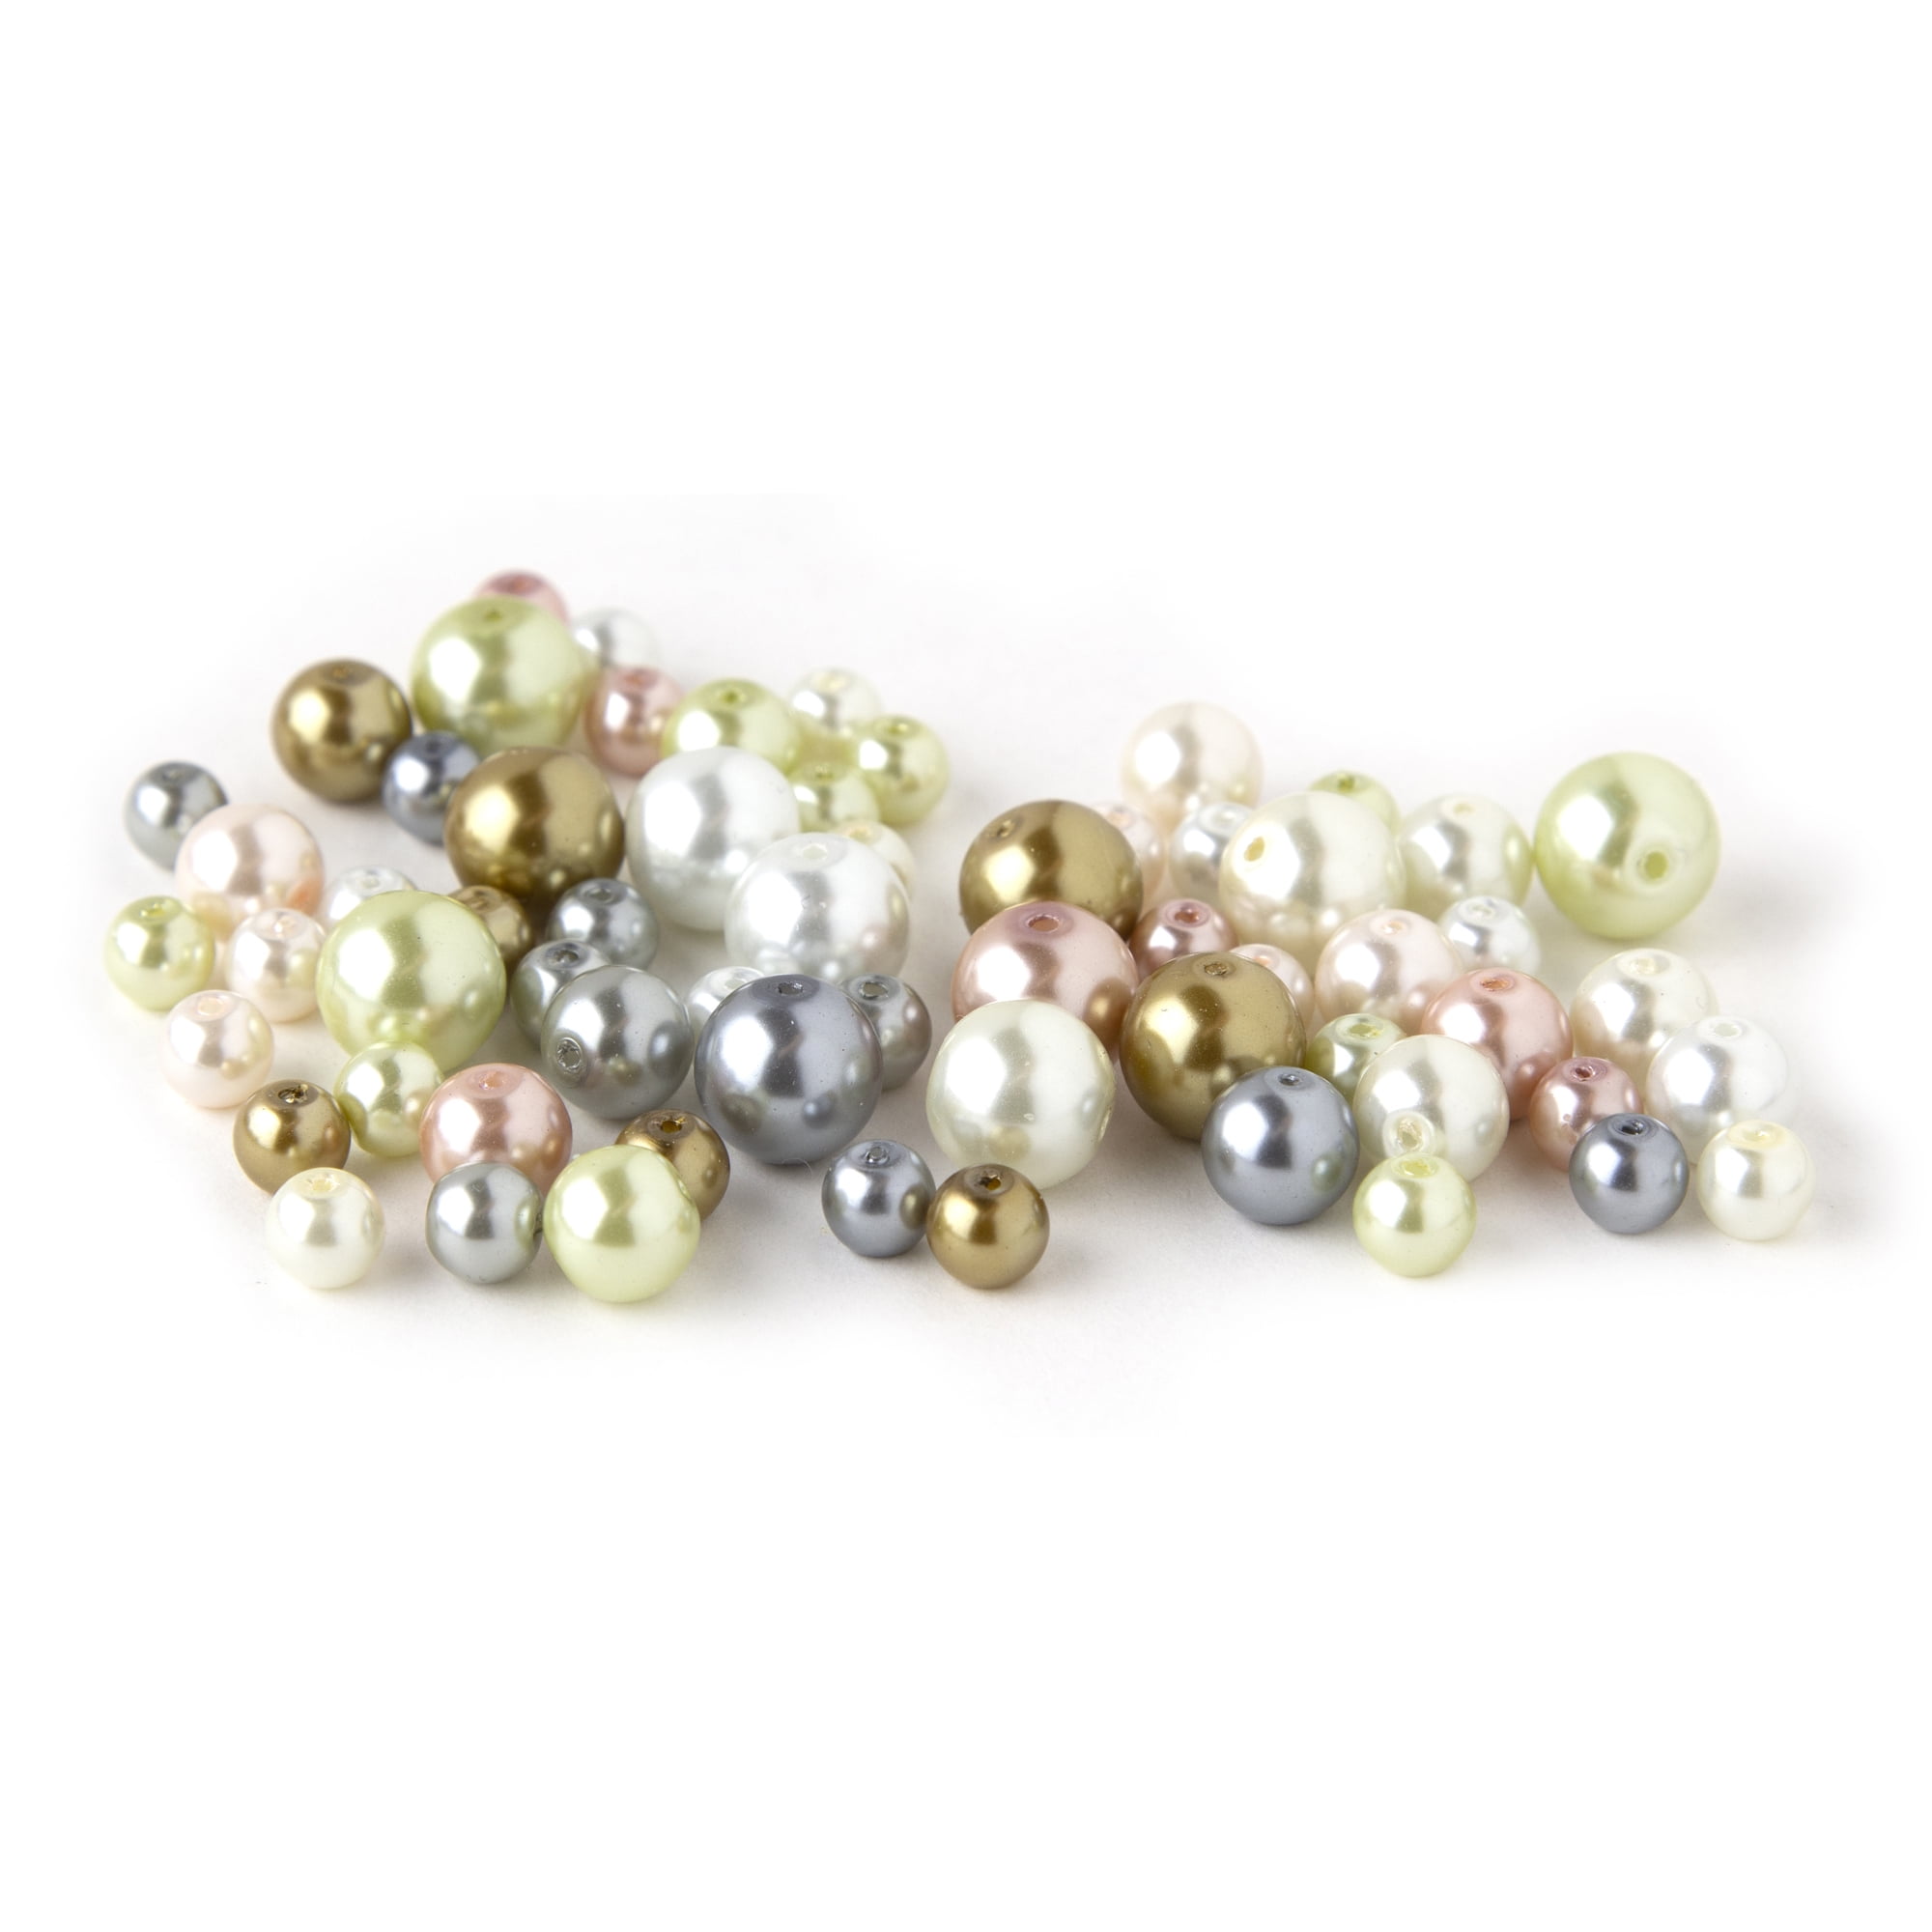 10 Vintage White Round Bead Crafts Jewelry Making 13 mm